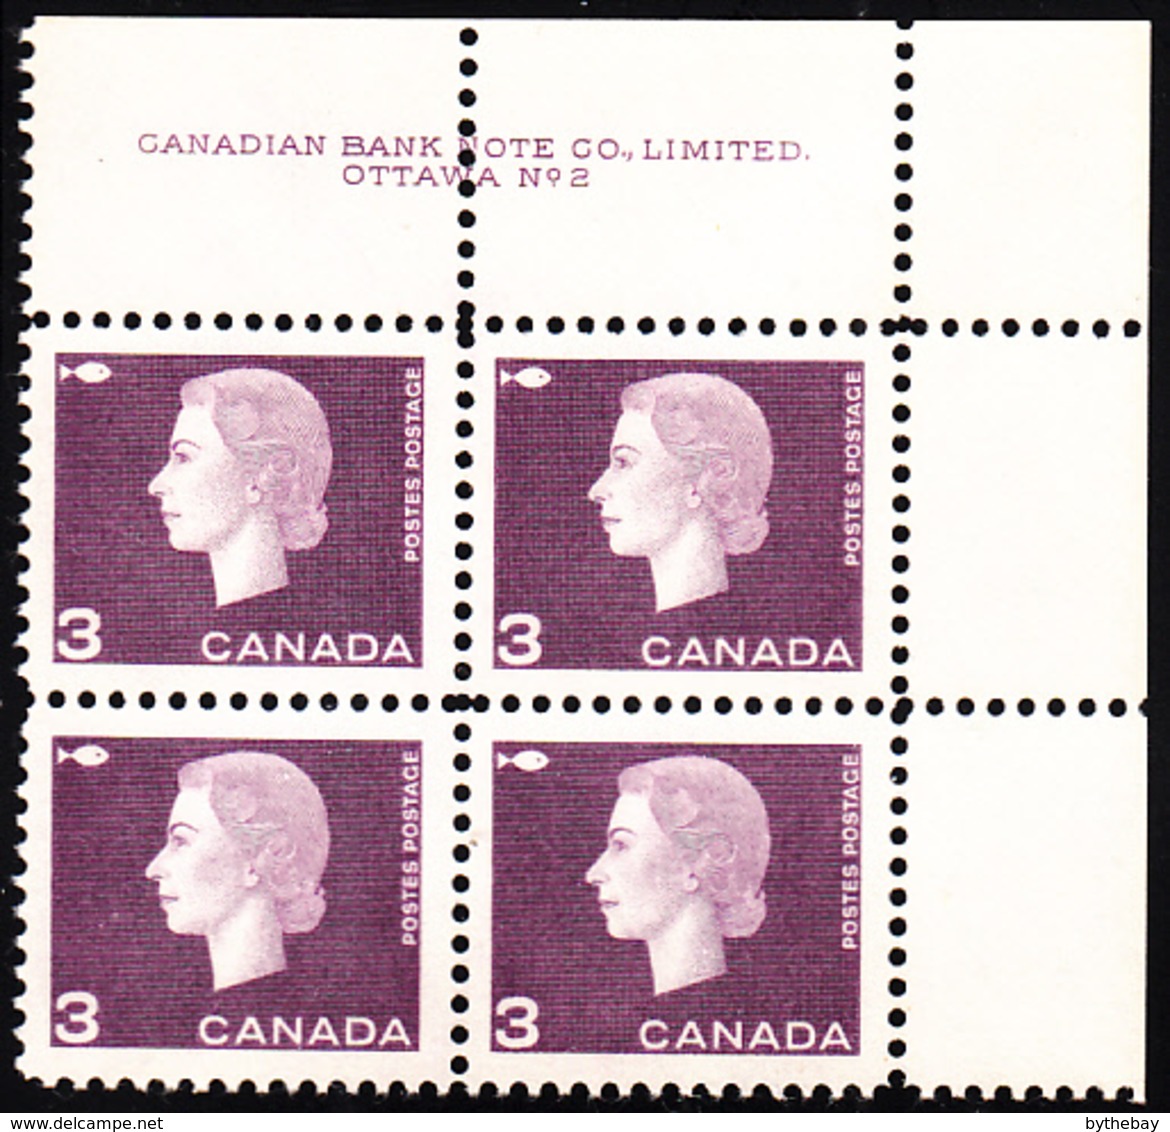 Canada 1963 MNH Sc #403 3c QEII Cameo Purple Plate #2 UR - Num. Planches & Inscriptions Marge